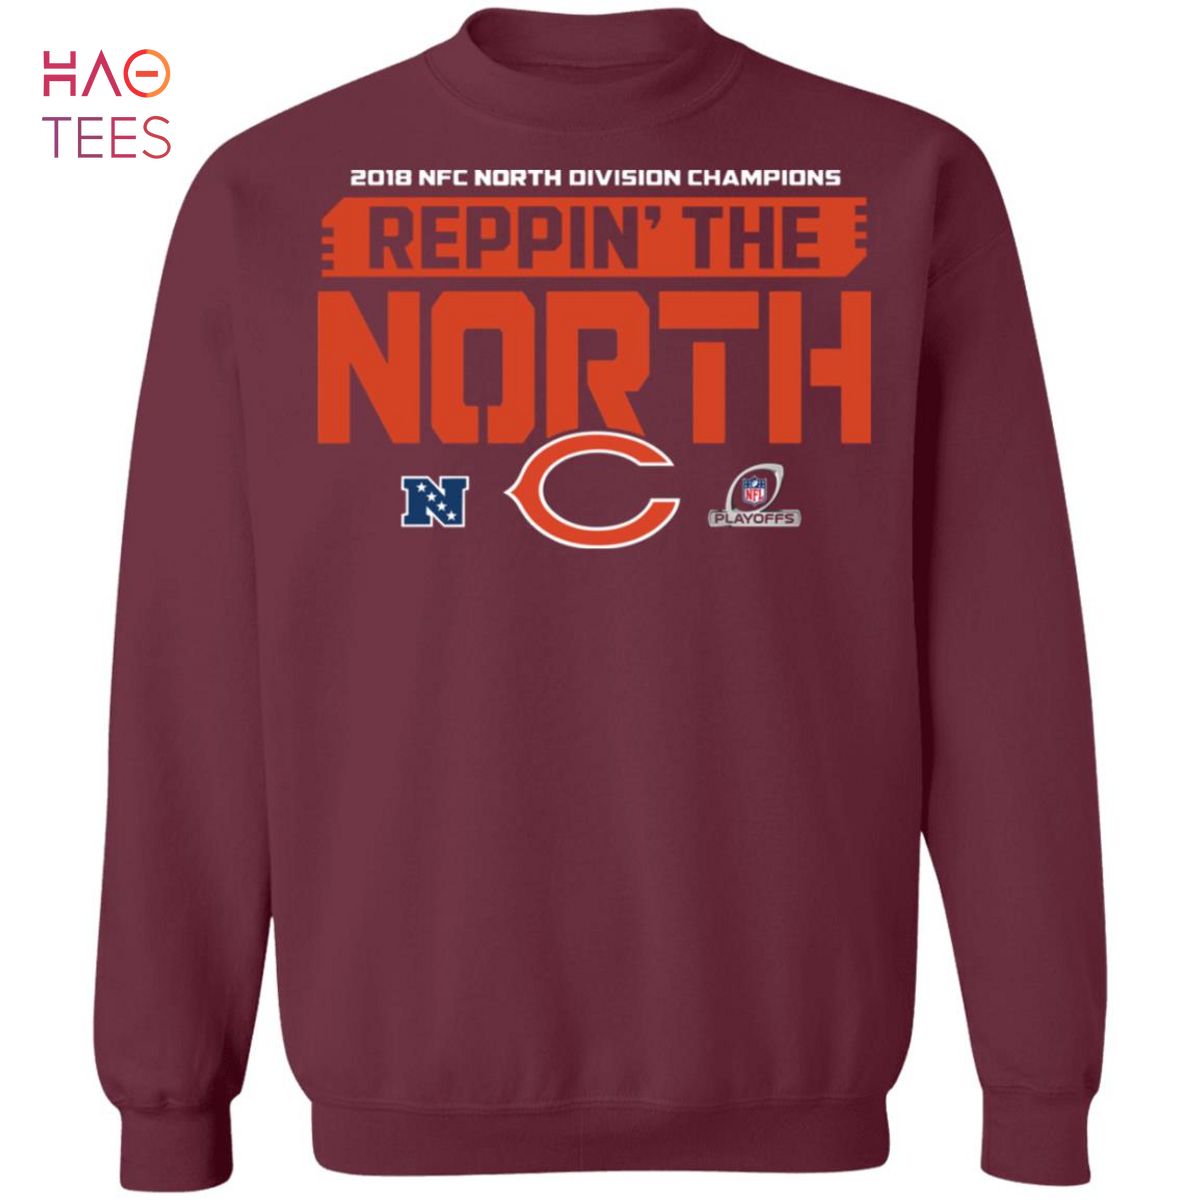 HOT Chicago Bears Championship Sweater